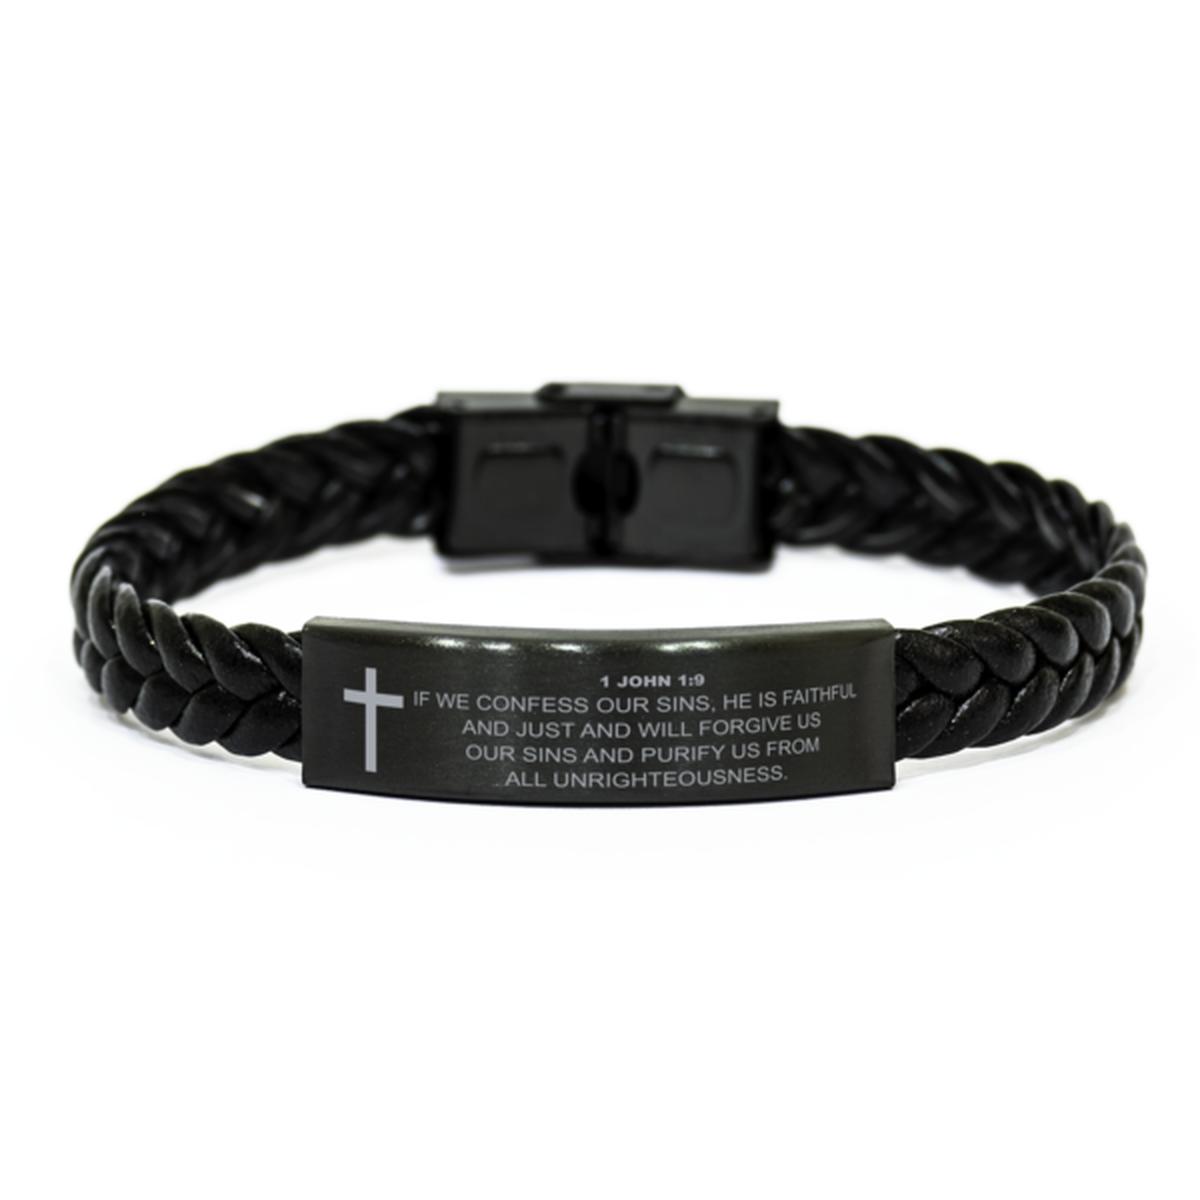 1 John 1:9 Bracelet, If We Confess Our Sins, Bible Verse Bracelet, Christian Bracelet, Braided Leather Bracelet, Easter Gift